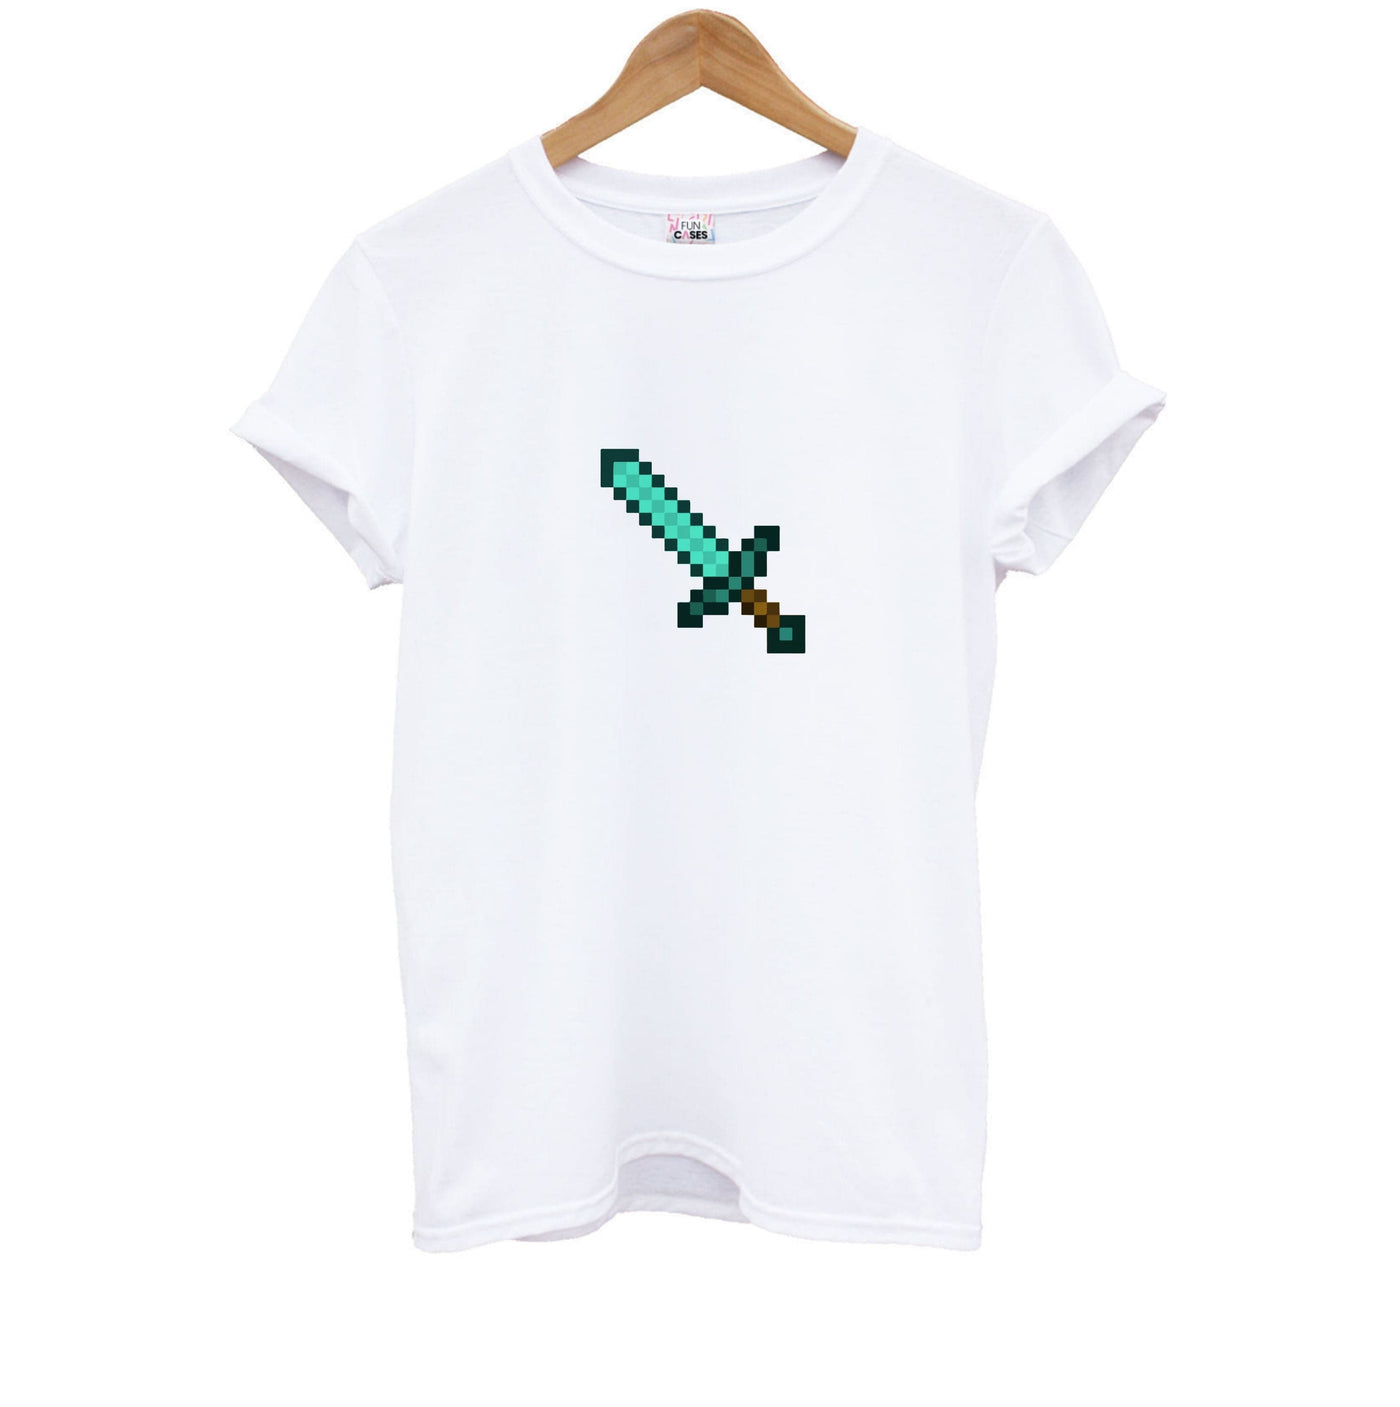 Diamond Sword - Minecraft  Kids T-Shirt